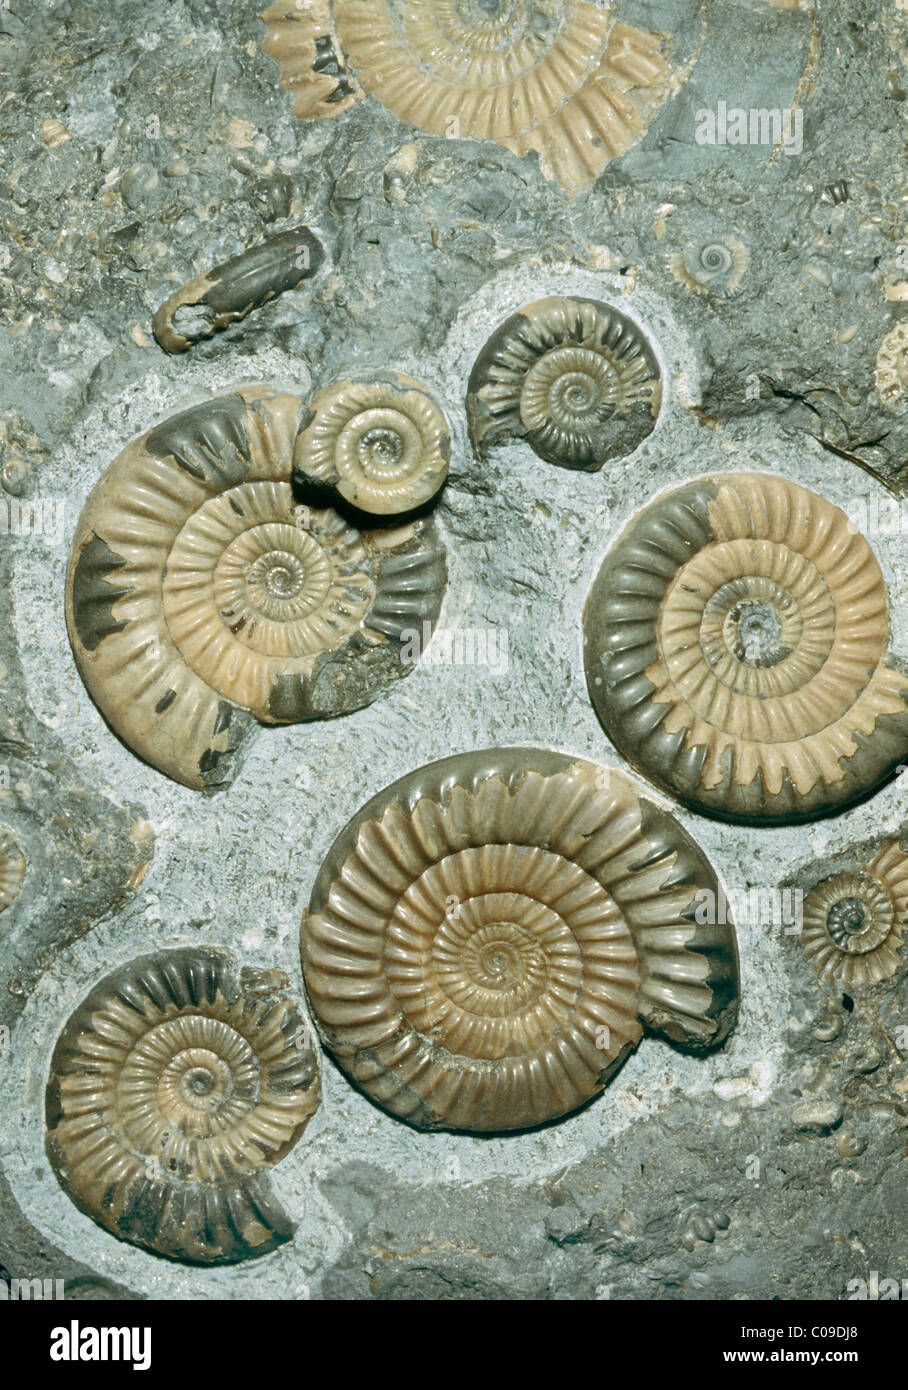 Ammoniti fossili, (Promicroceras planicosta), early Jurassic, Inghilterra. Foto Stock